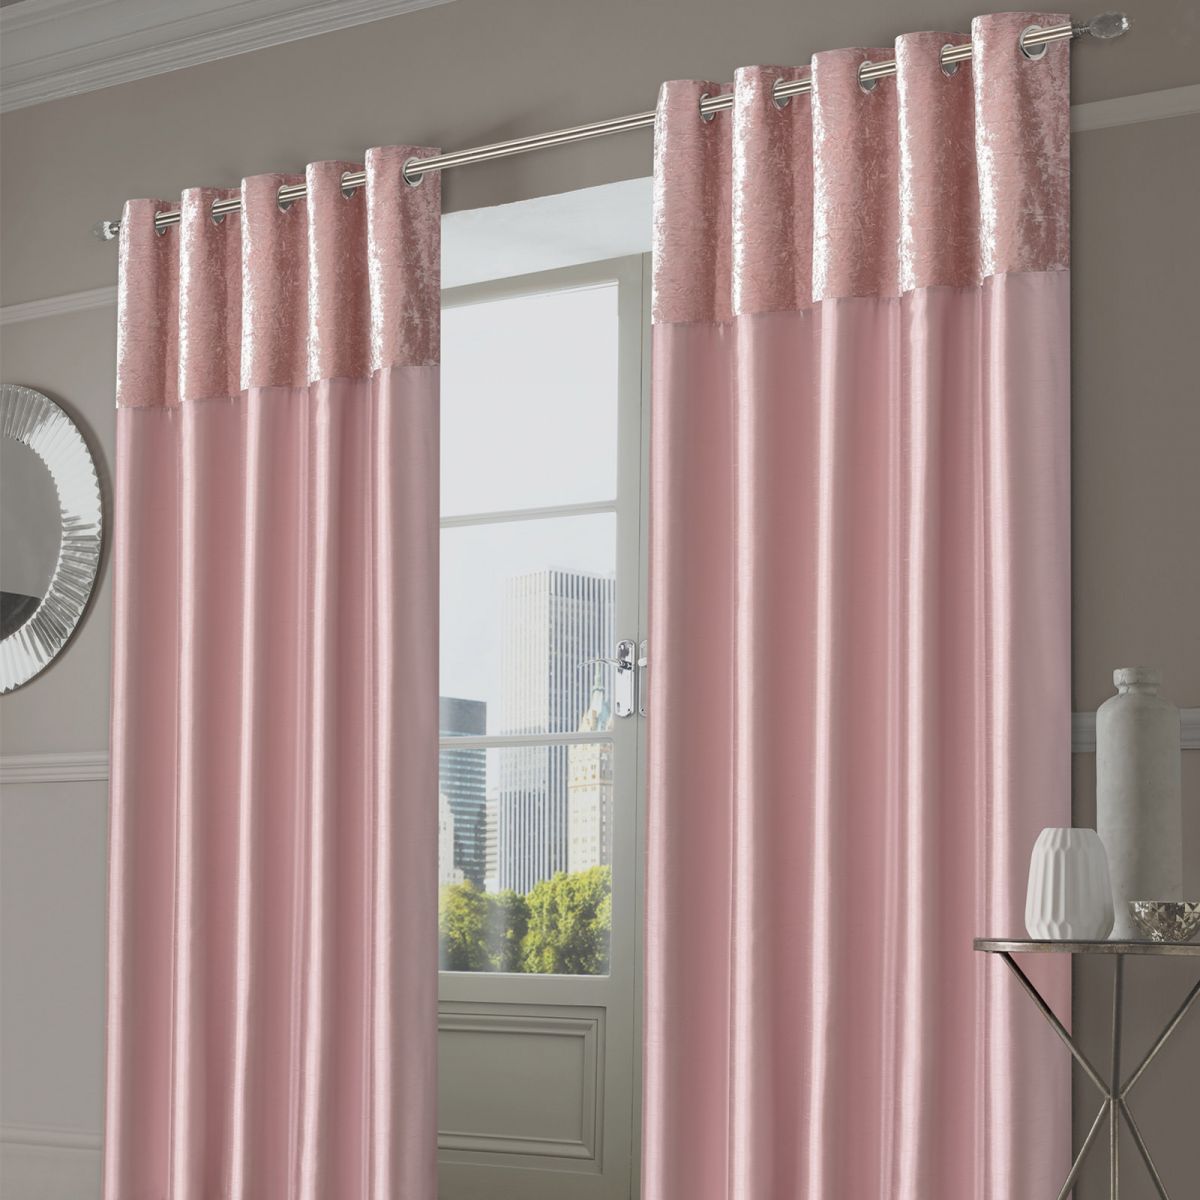 Sienna Home Manhattan Crushed Velvet Band Eyelet Curtains - Blush Pink, 90" x 72"